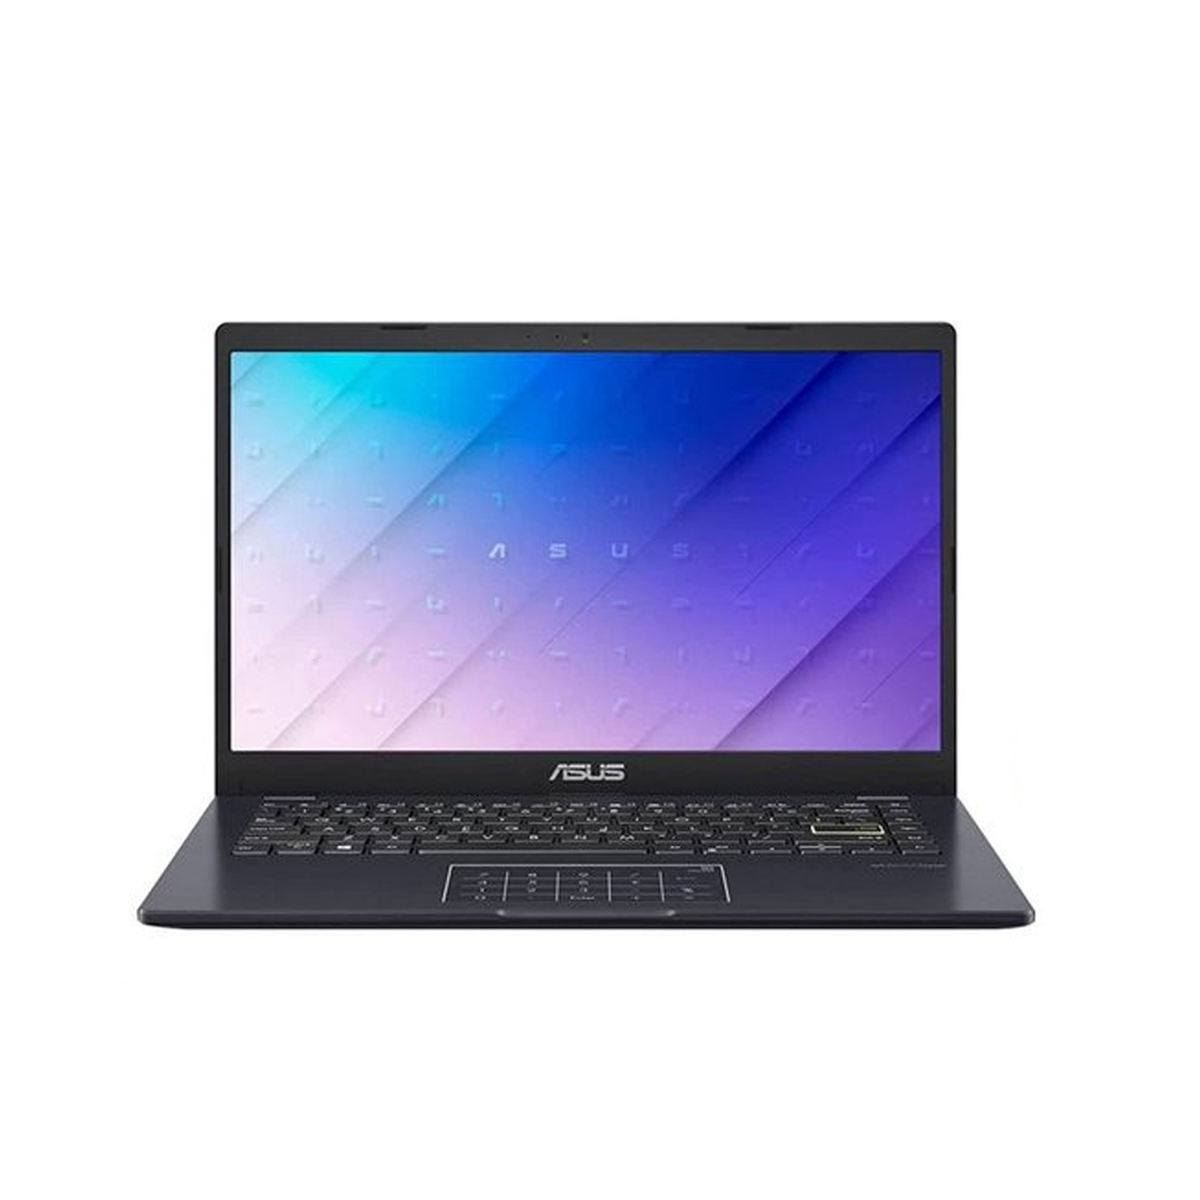 Asus Notebook E410MA-BV244T - Intel Celeron N4020 1.10 Ghz, 4GB RAM, 256GB SSD, 14.0'' HD Screen, Intel HD Graphics,Windows 10 Home,Blue